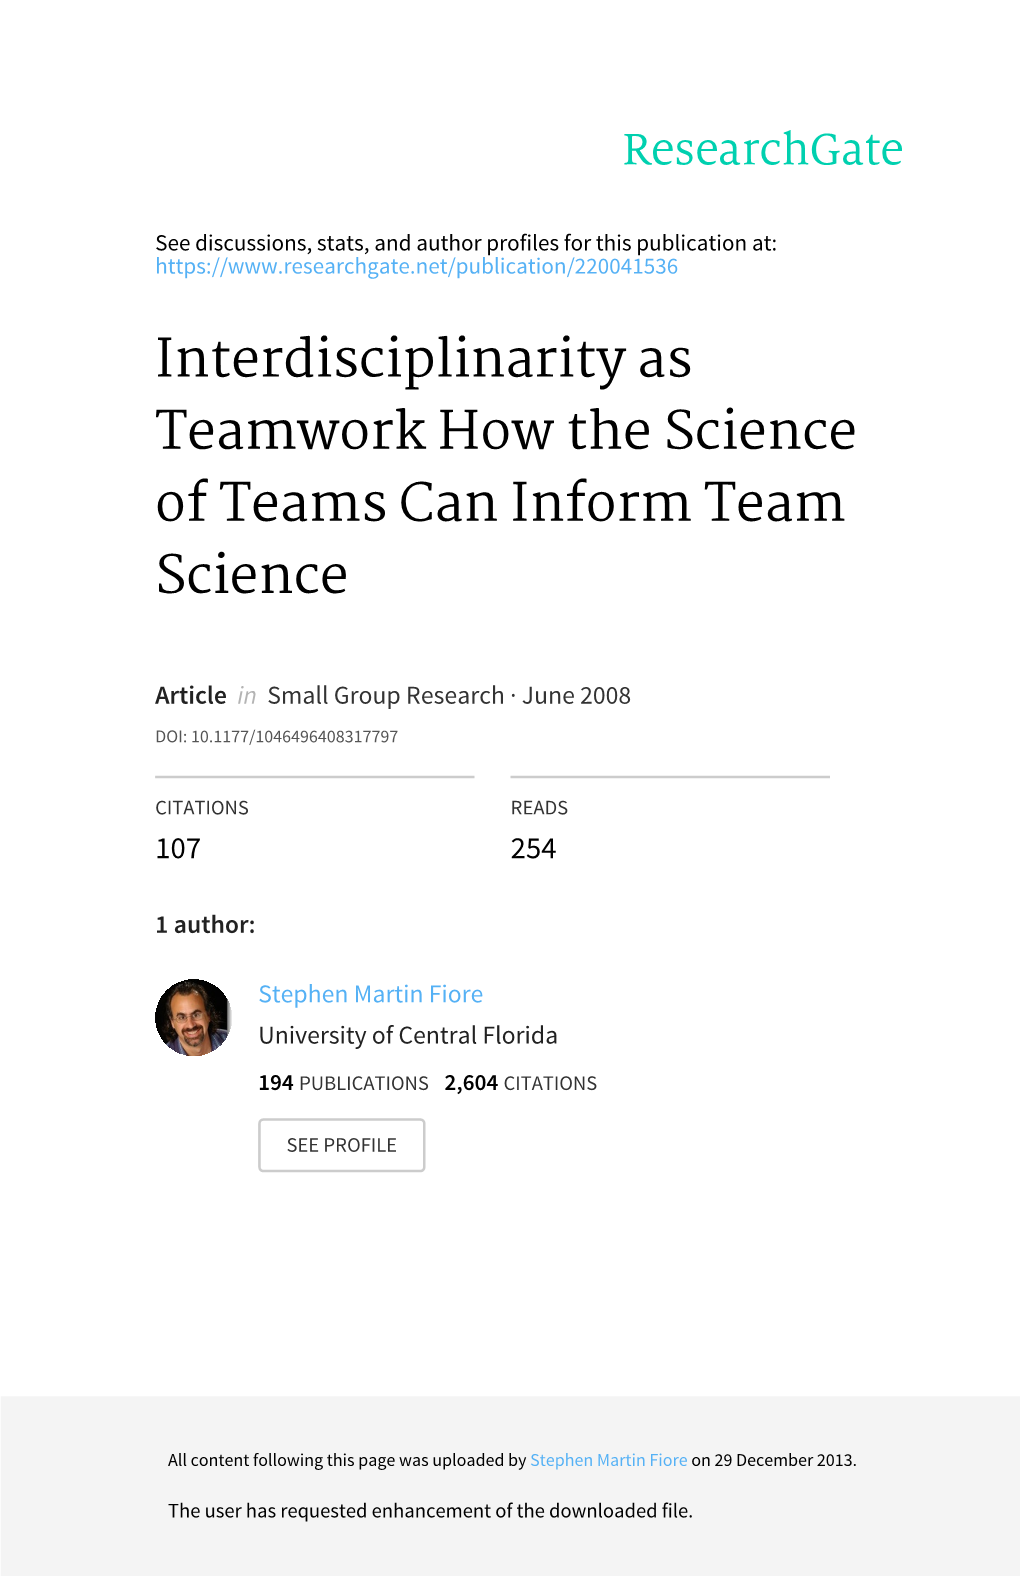 Interdisciplinarity As Teamwork How the Science of Teams Can Inform Team Science